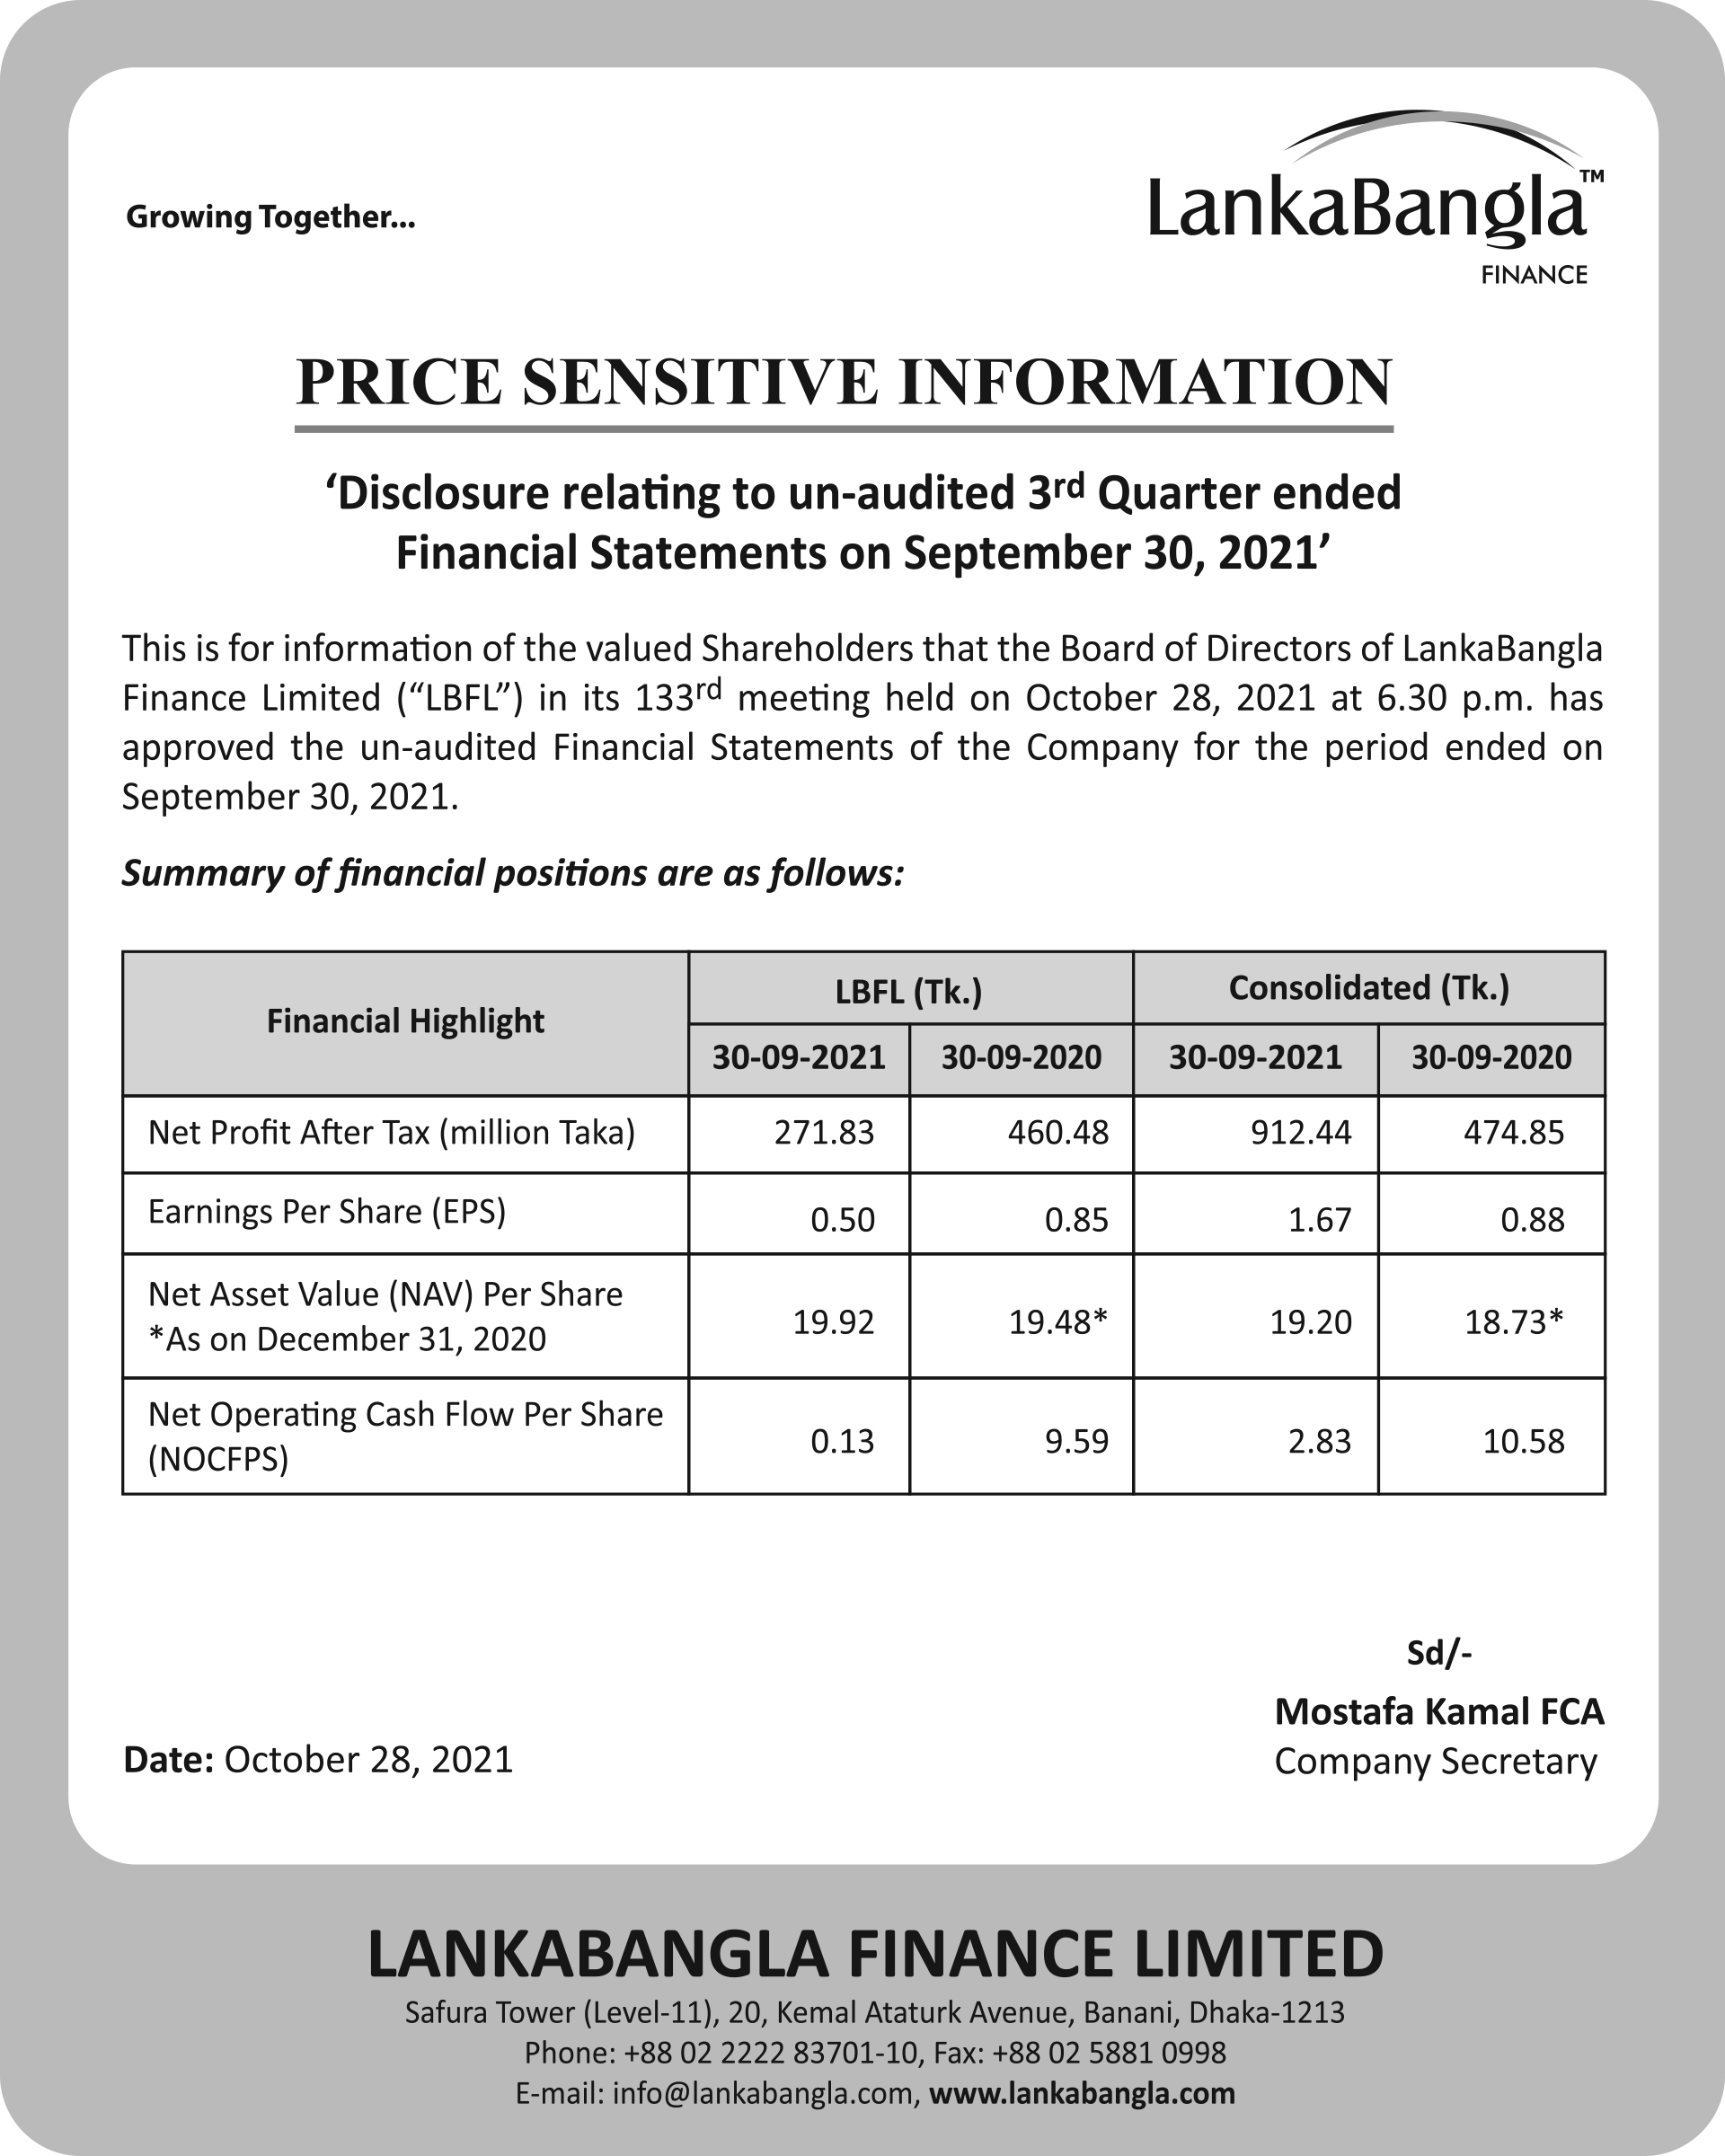 Price Sensitive Information of LankaBangla Finance Limited